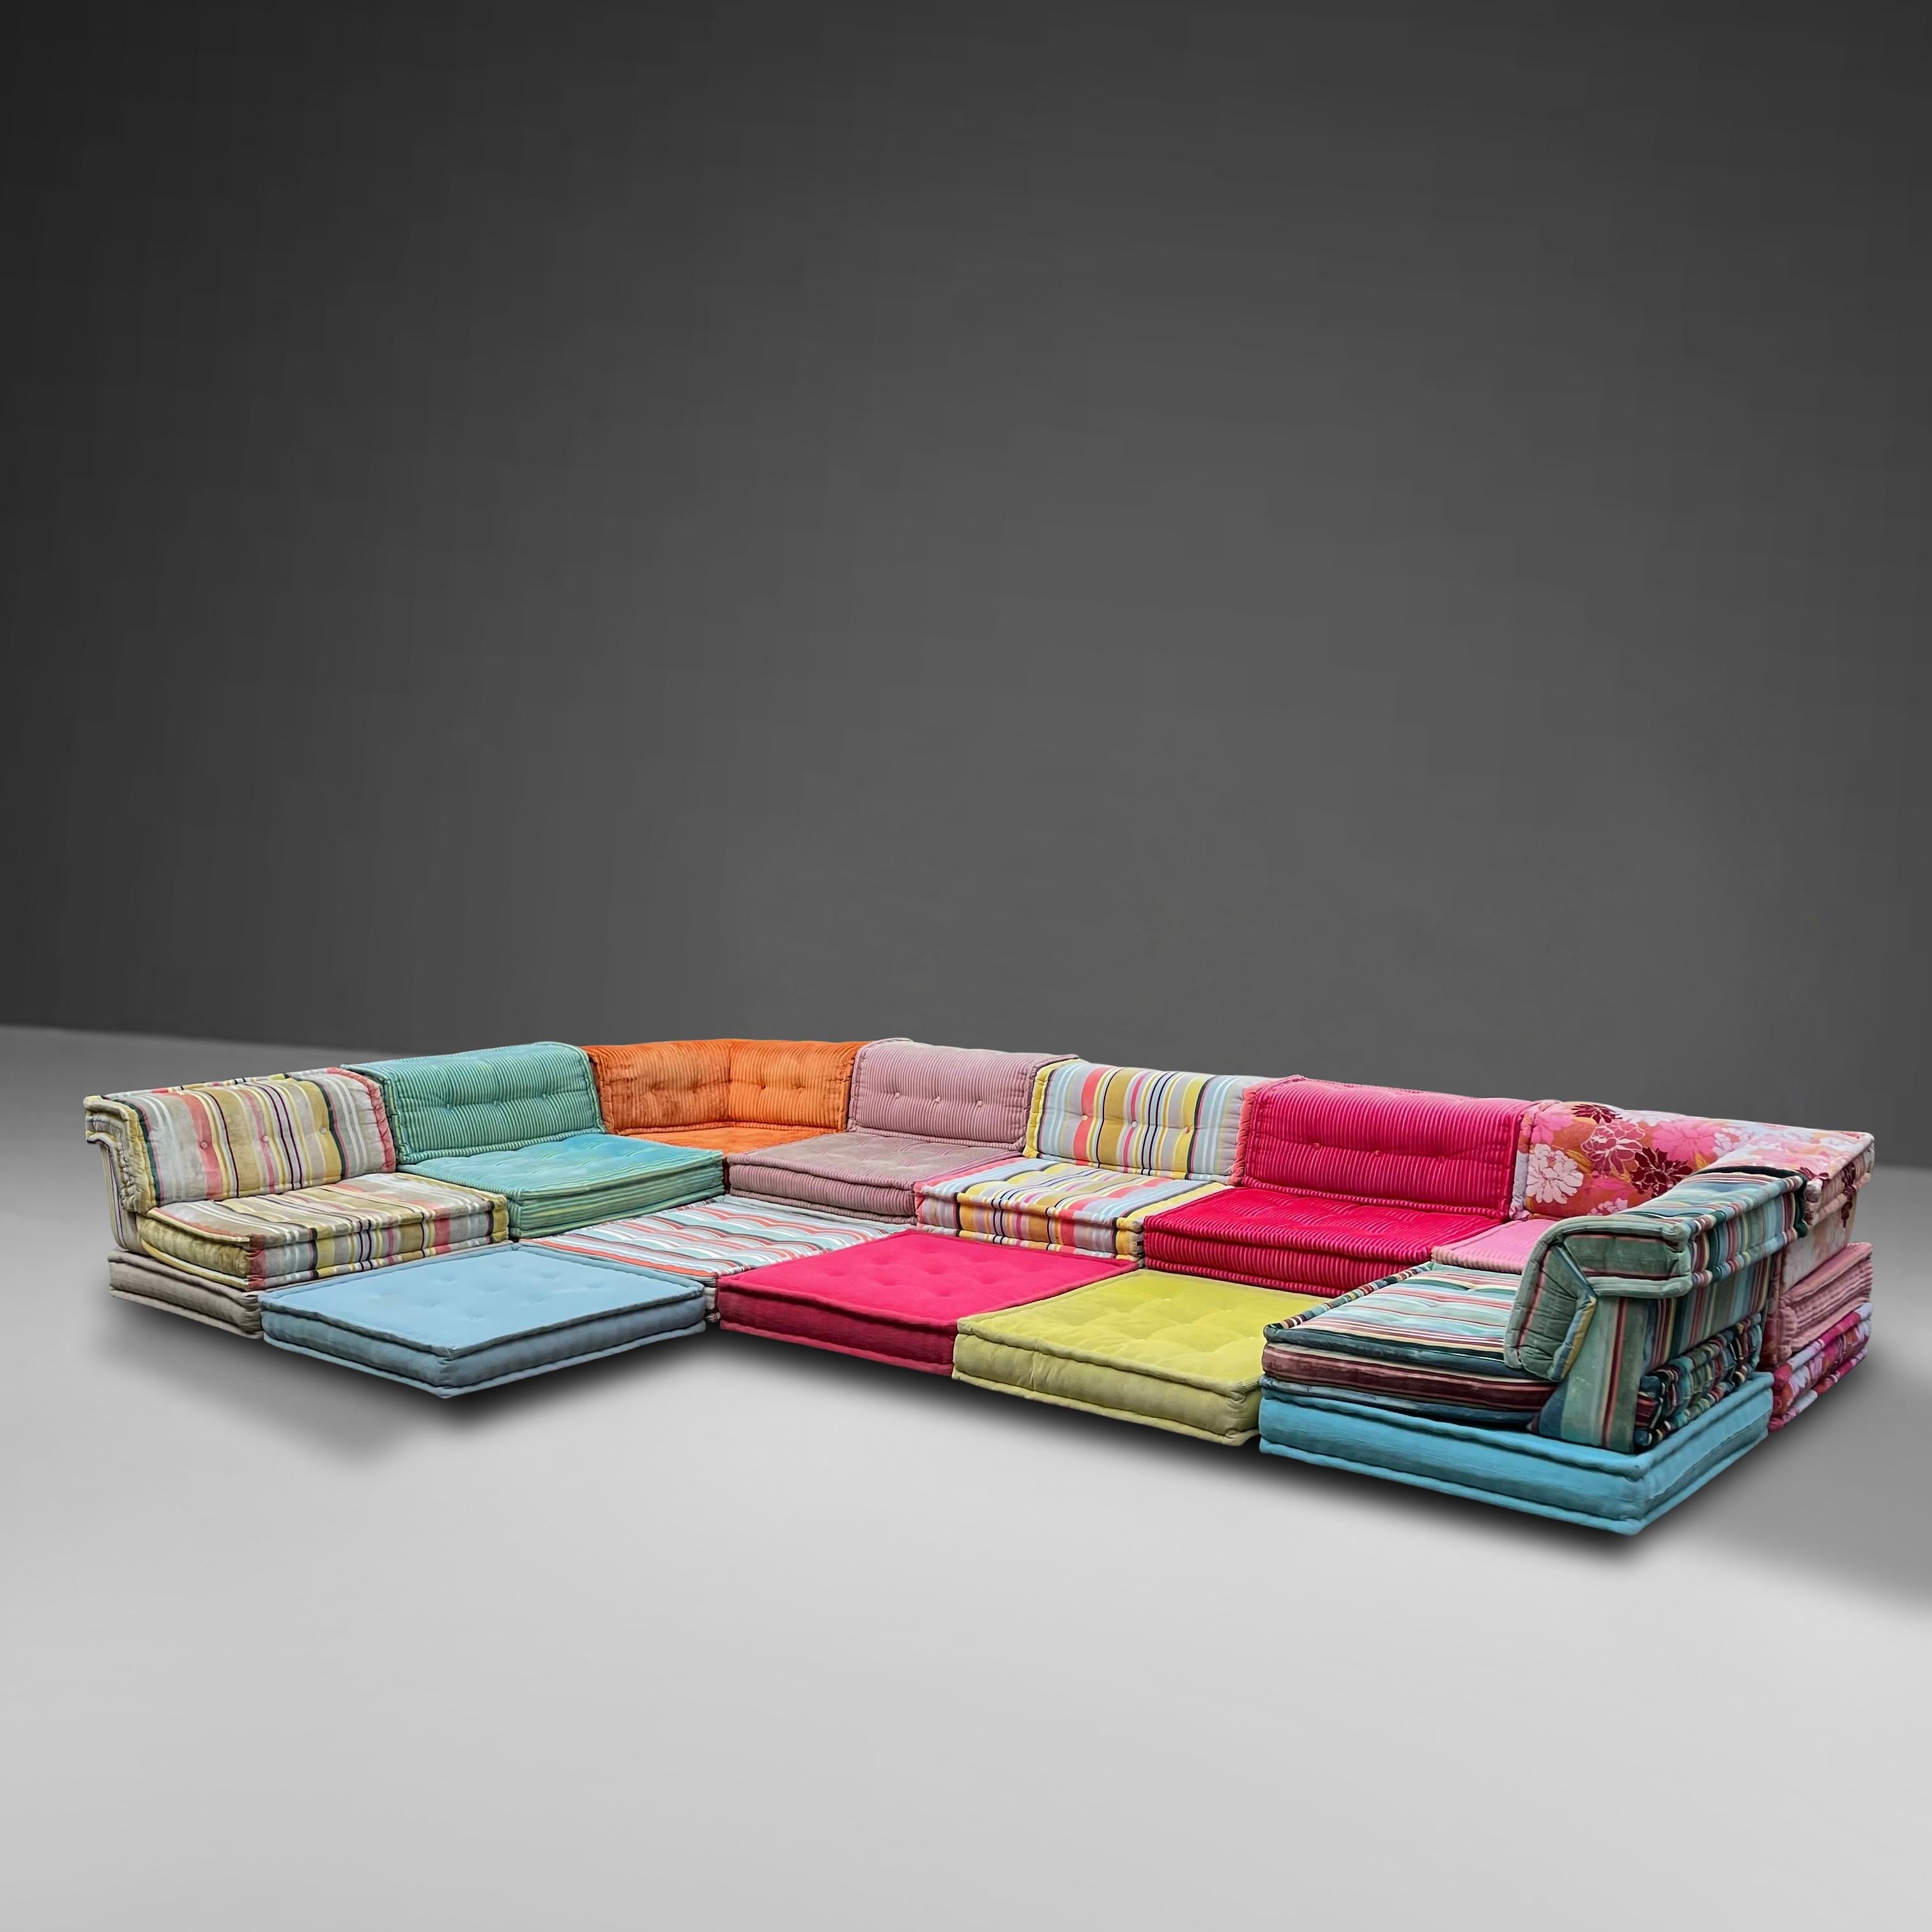 'Mah Jong' Modular Sectional Sofa Signed by Roche Bobois, France 2010 For Sale 3